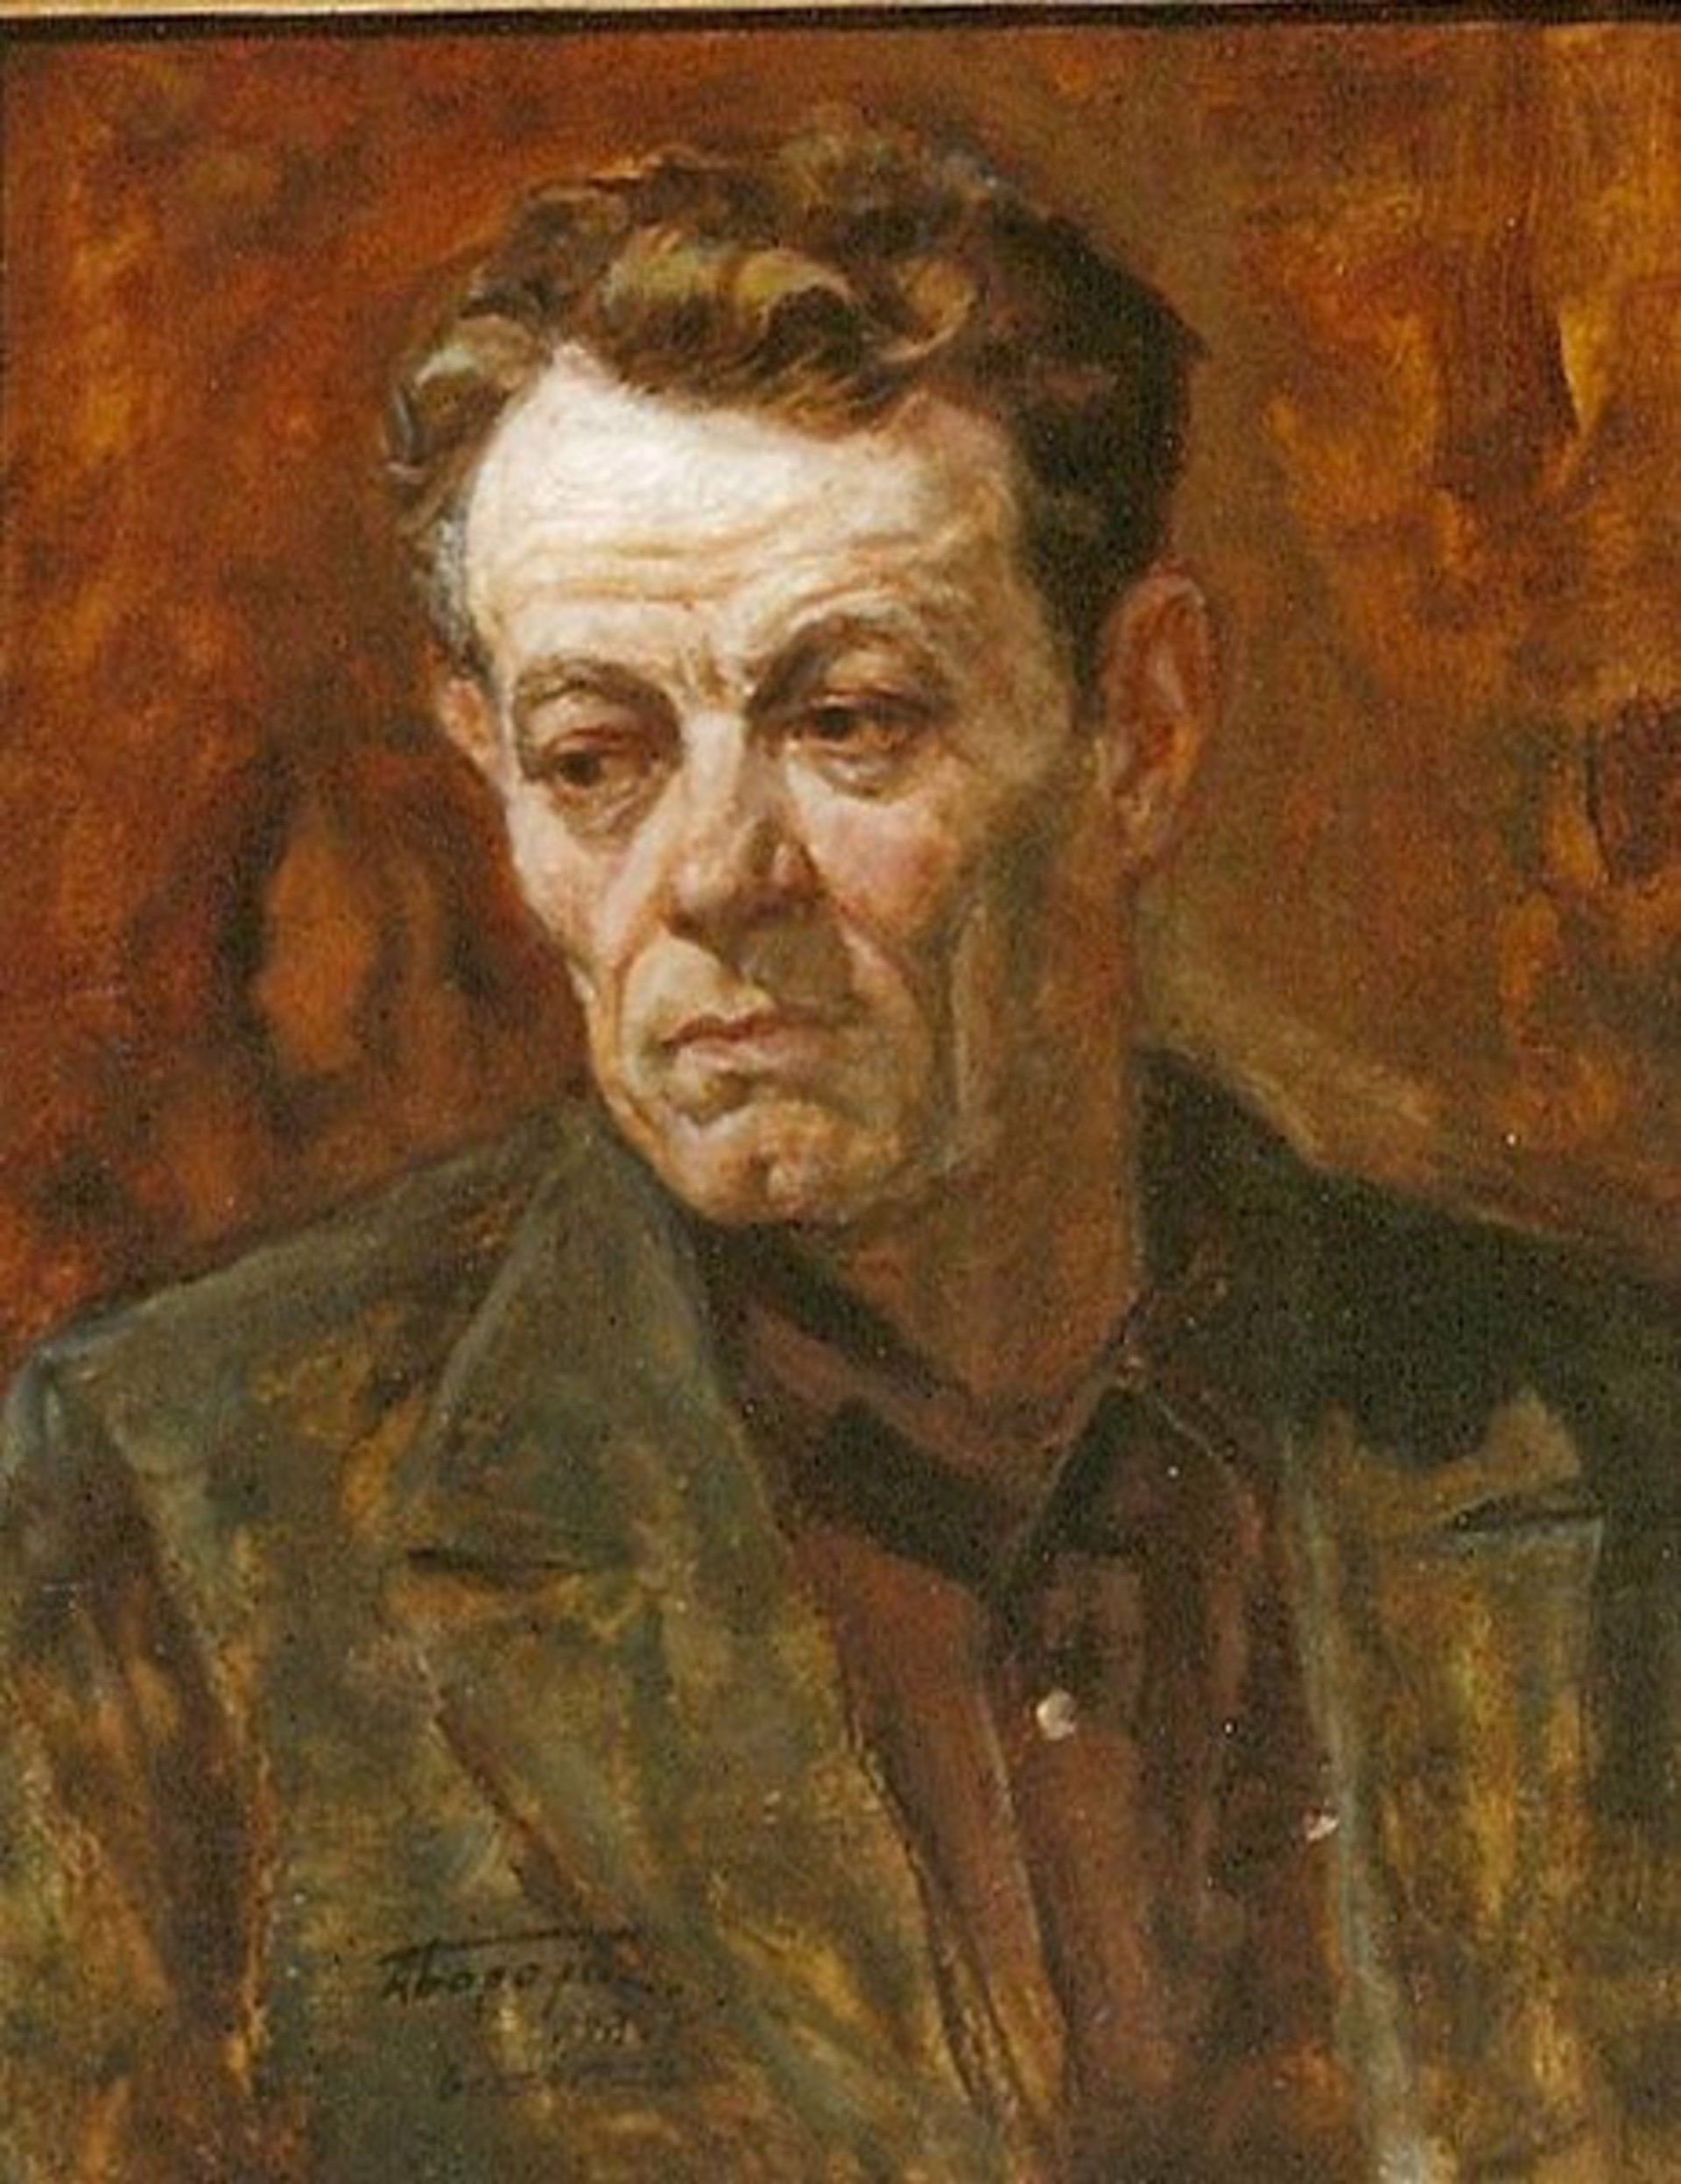 Vasili Shepilov, Crane Operator by Aleksei Borodin